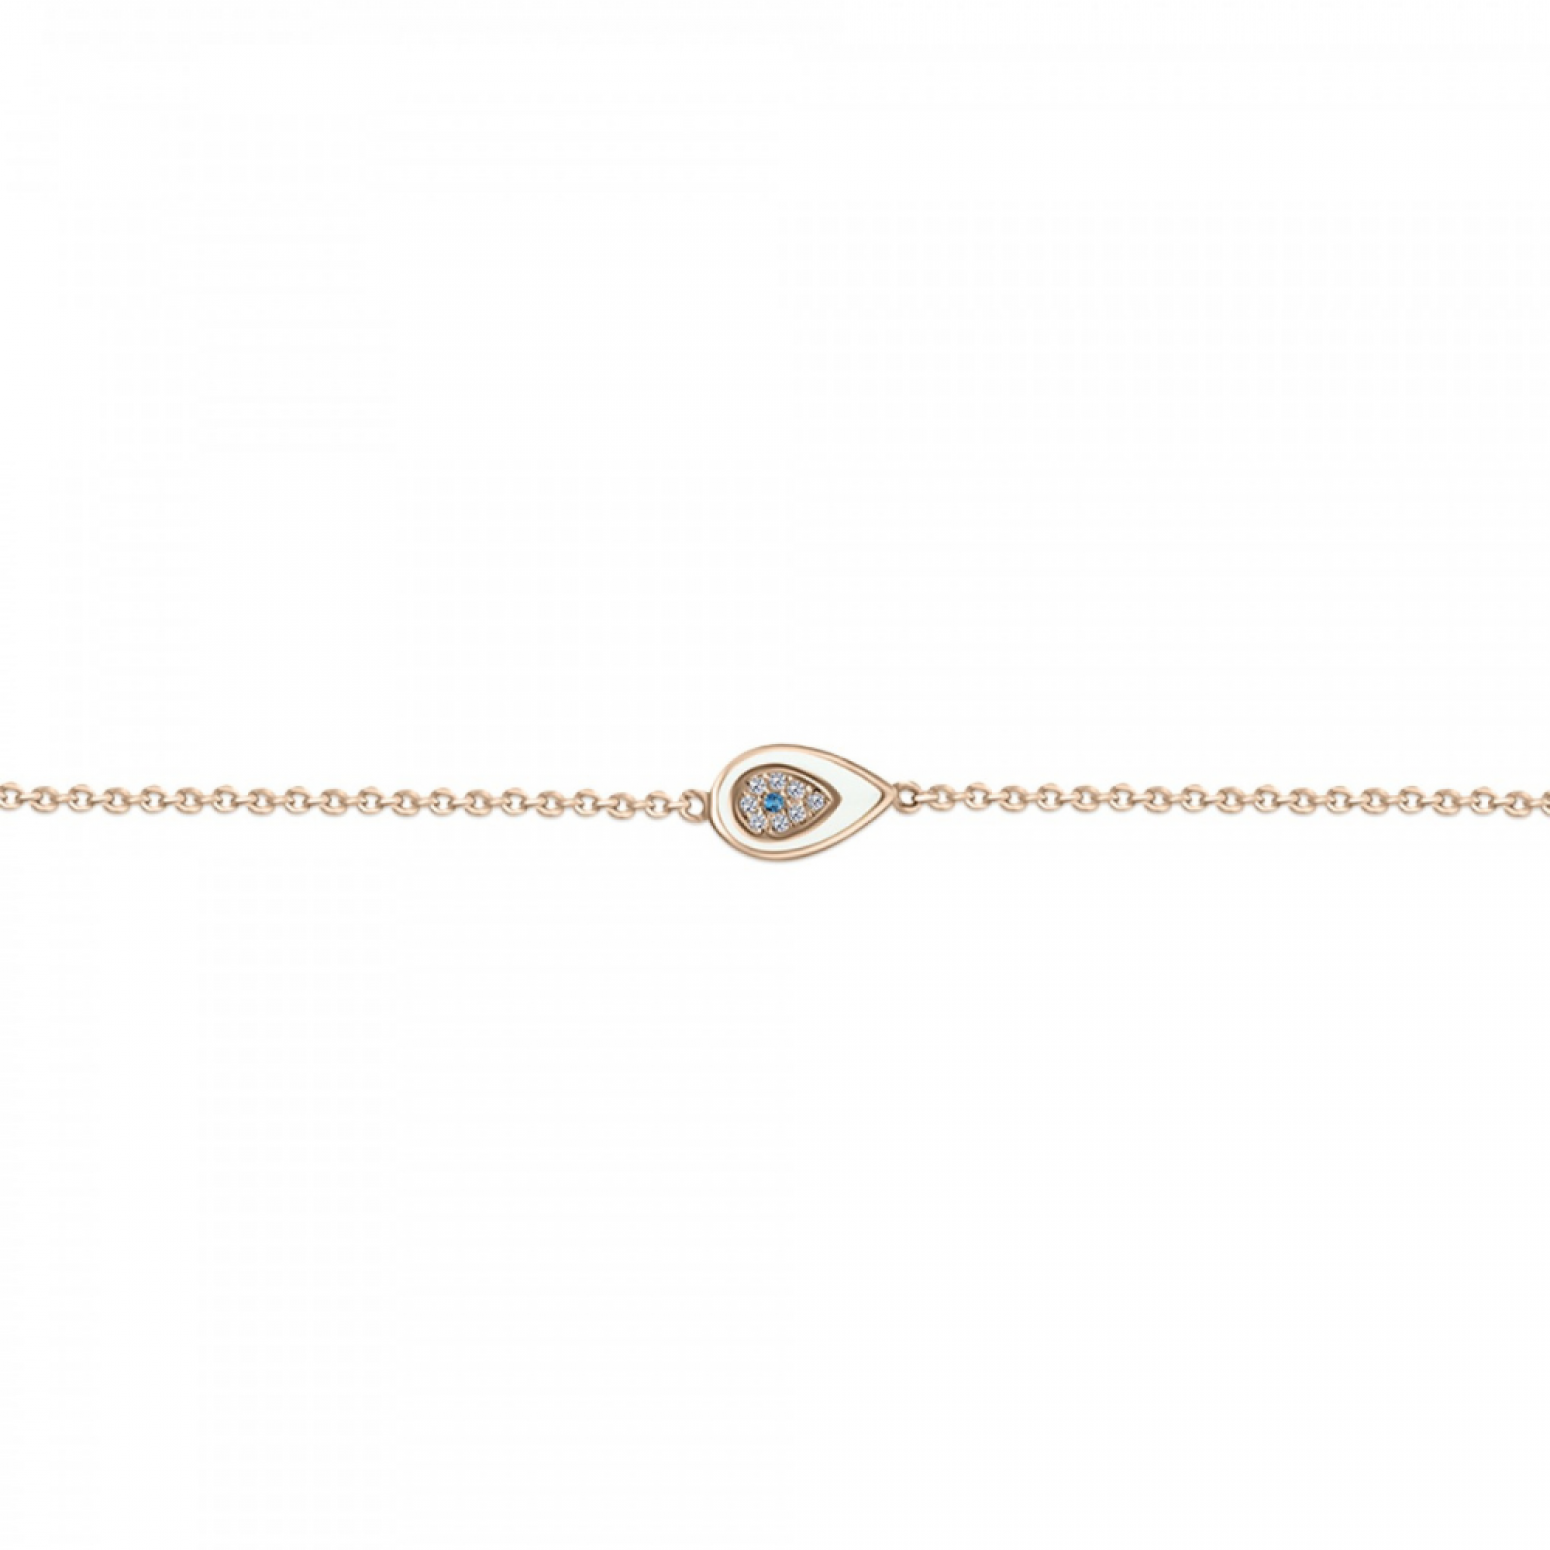 Eye bracelet Κ14 pink gold with blue,white zircon and enamel, br2470 BRACELETS Κοσμηματα - chrilia.gr